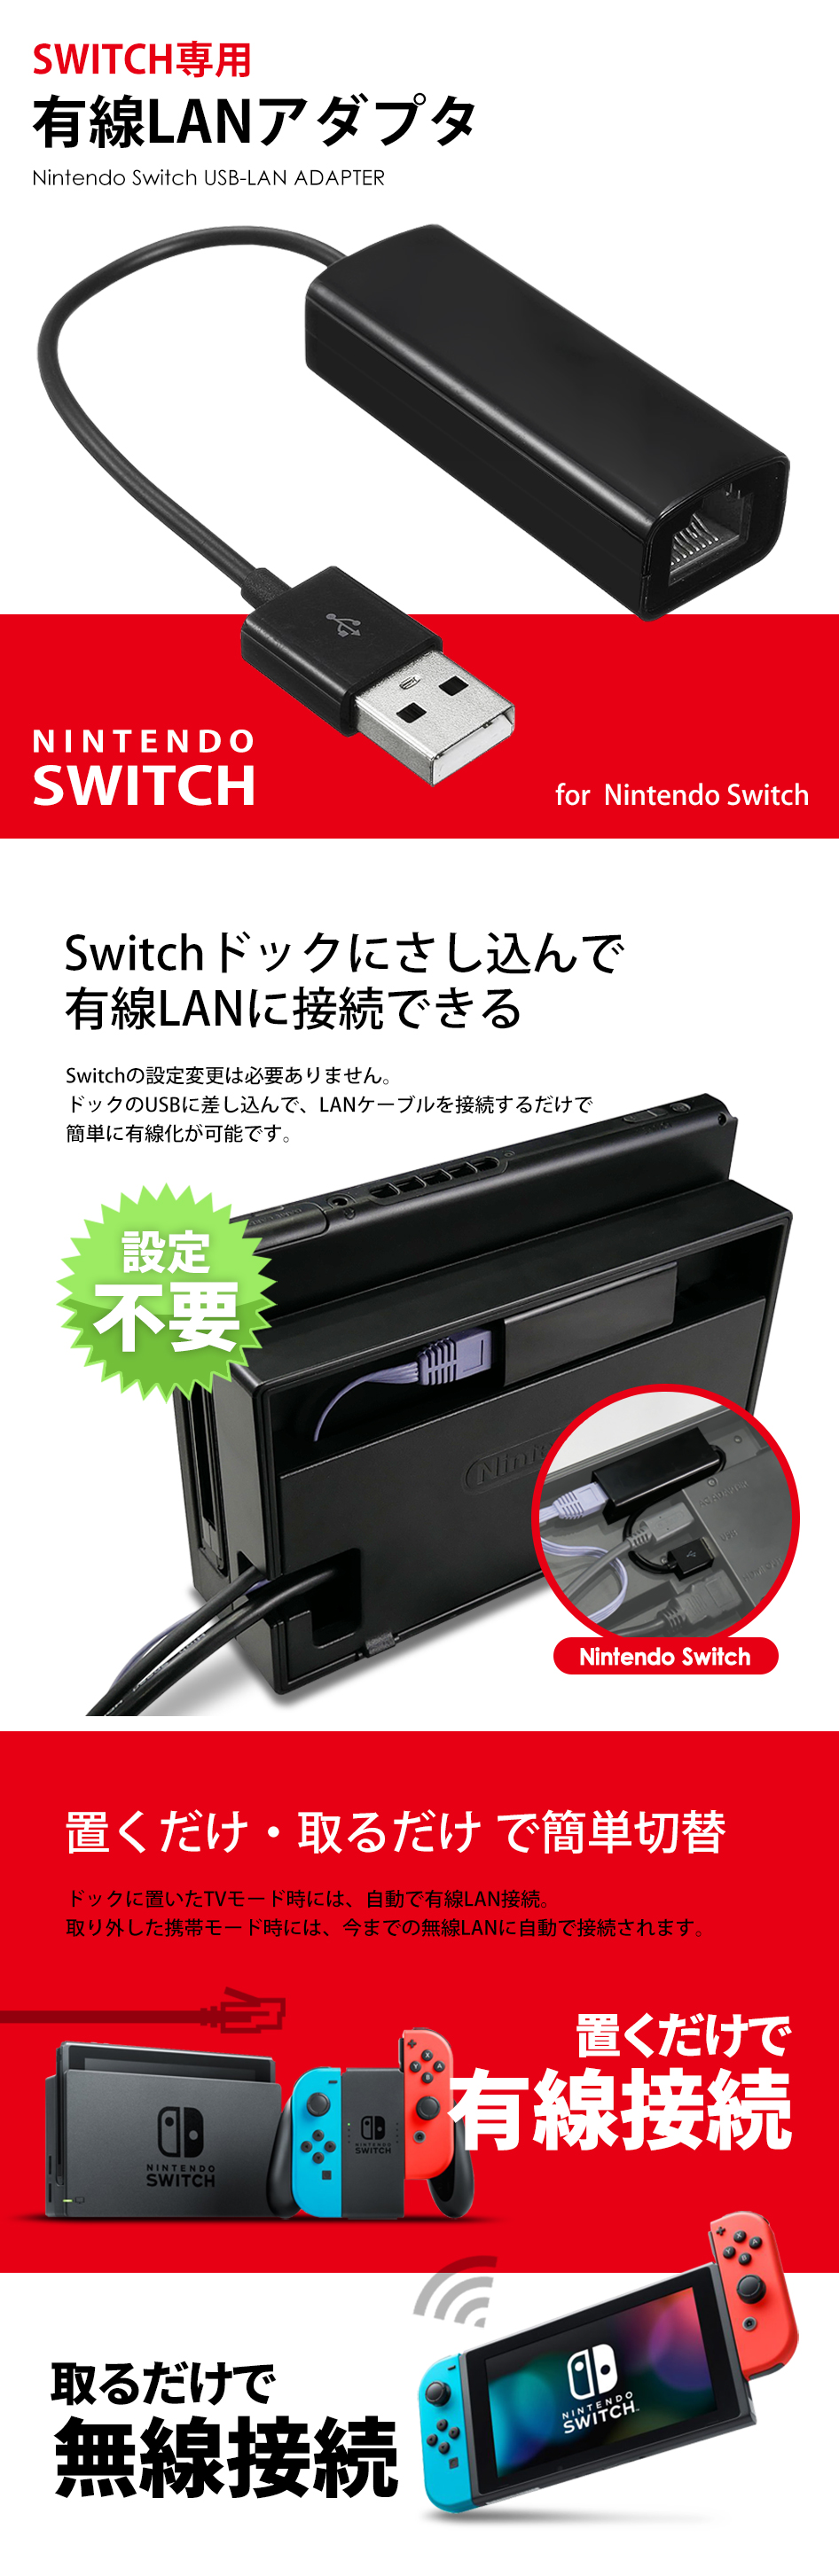 Nintendo Switch本体+LANアダプター+保護ガラス